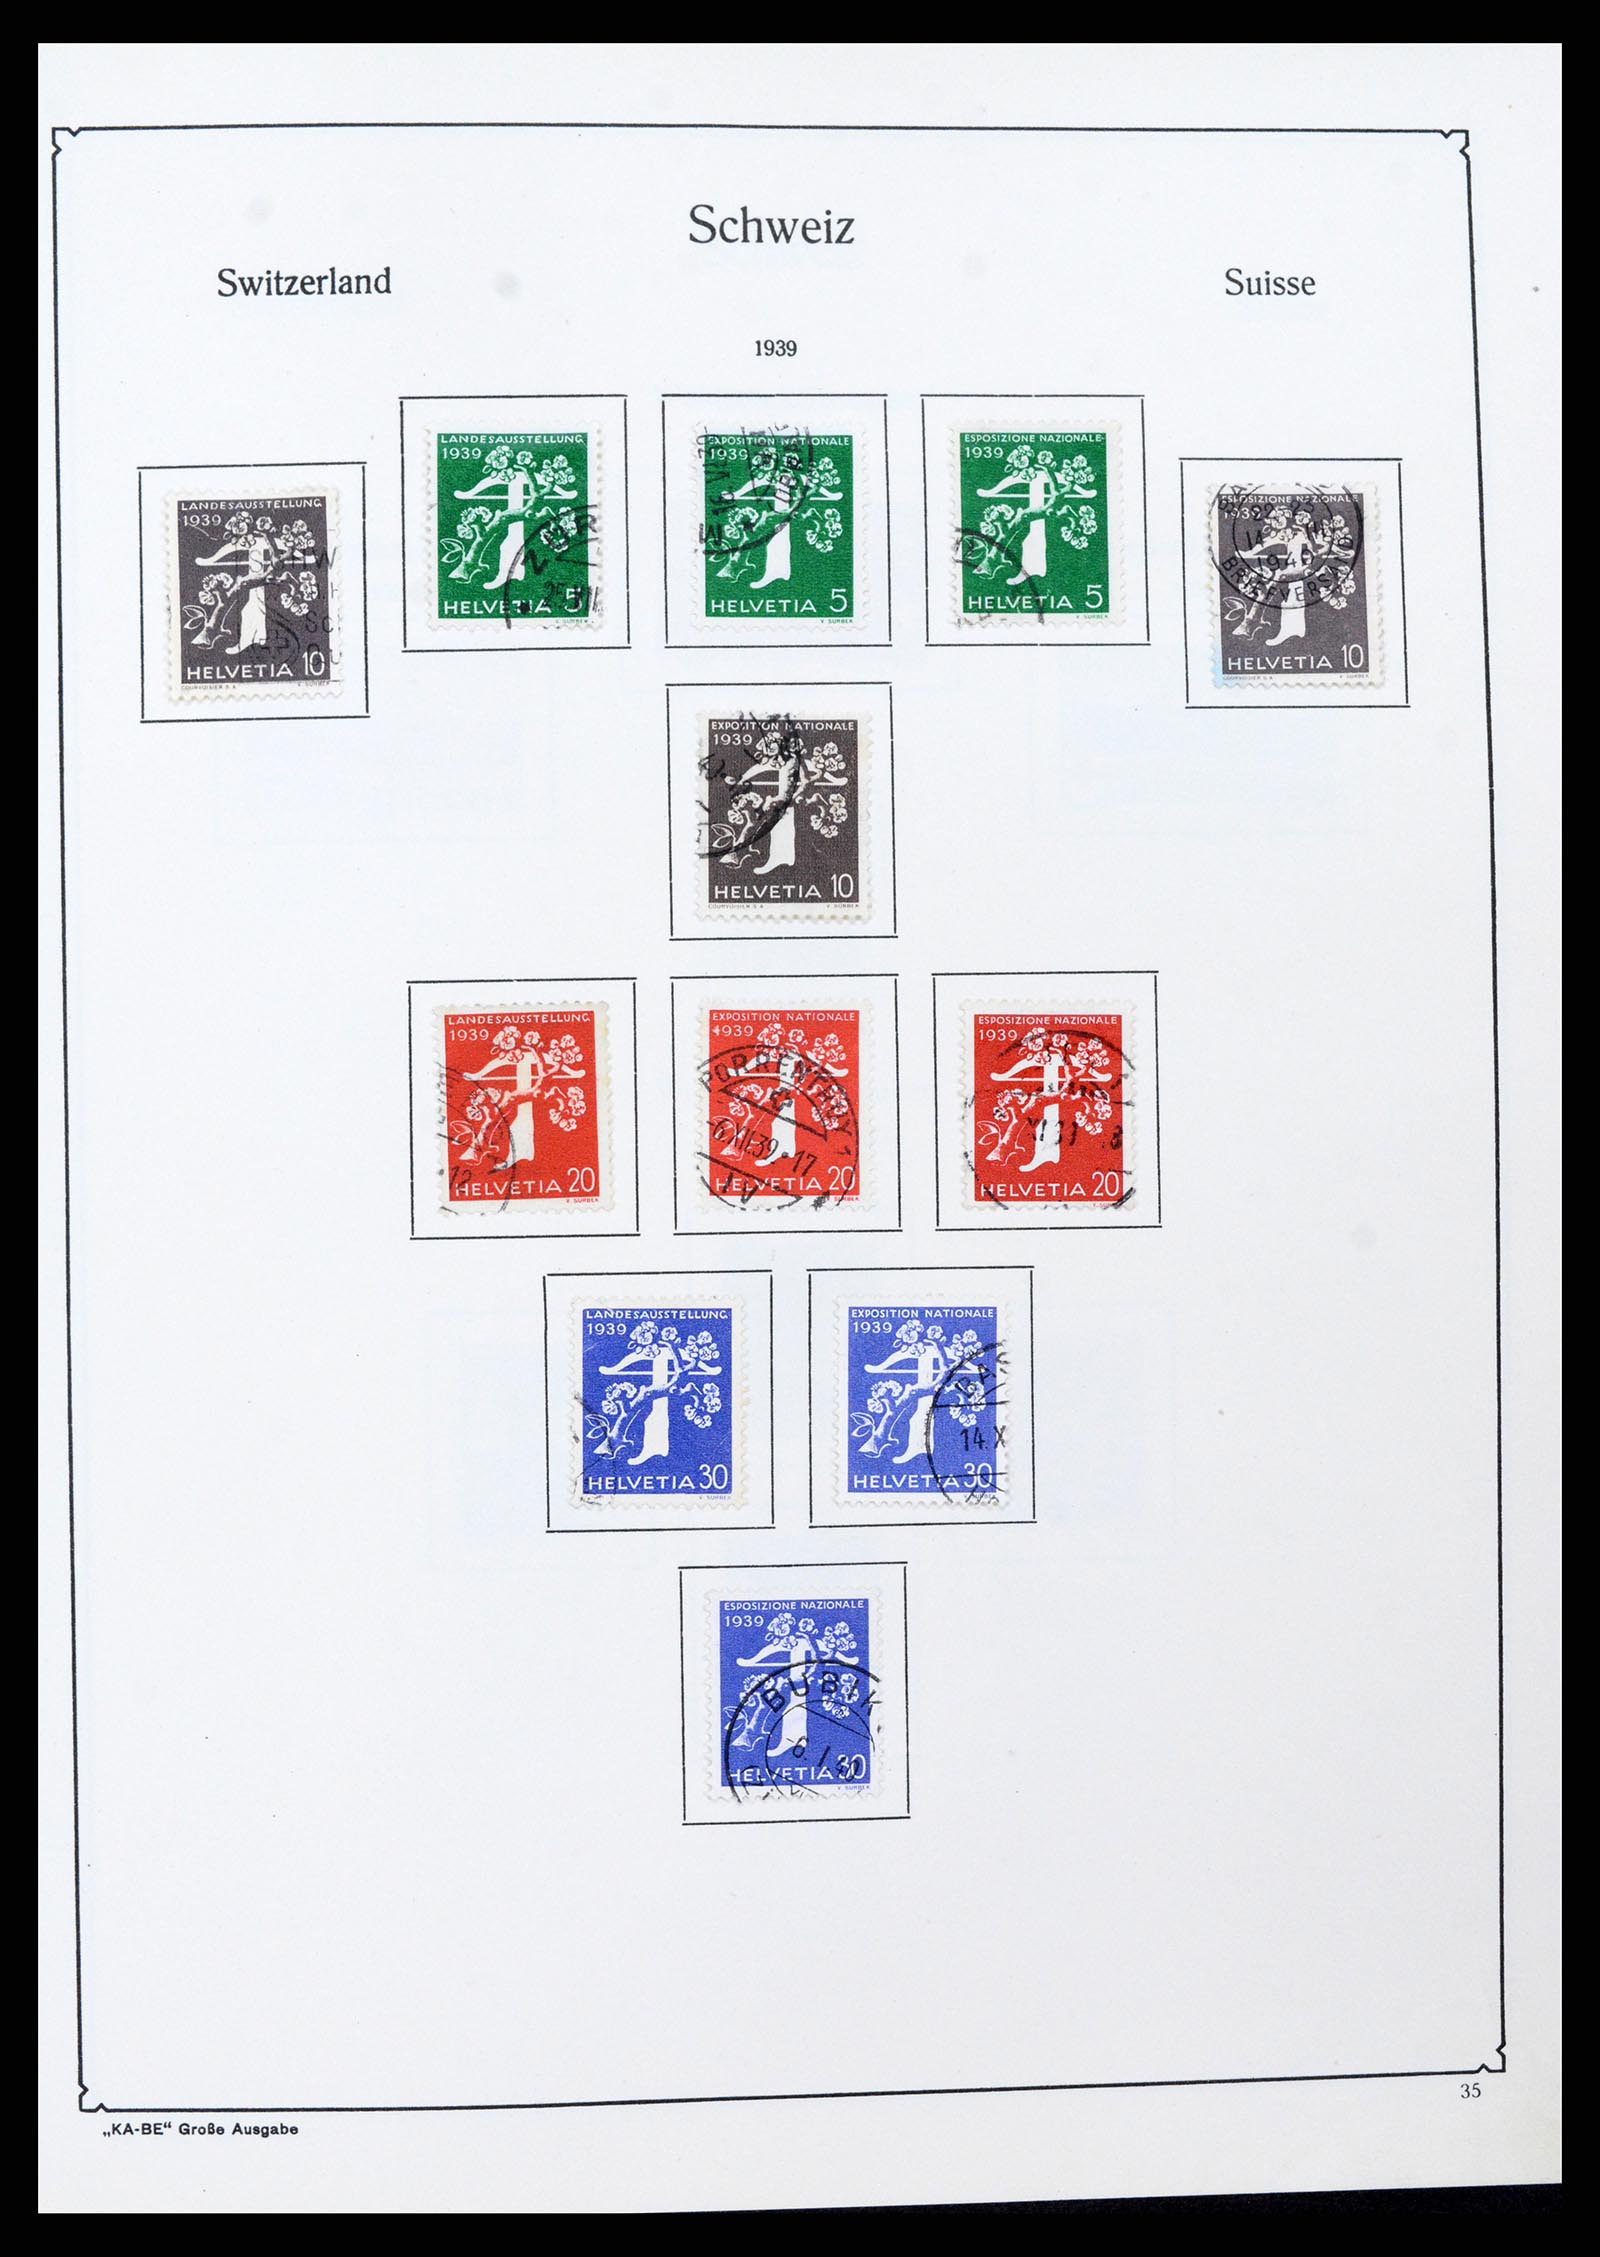 37588 034 - Stamp collection 37588 Switzerland 1854-1974.